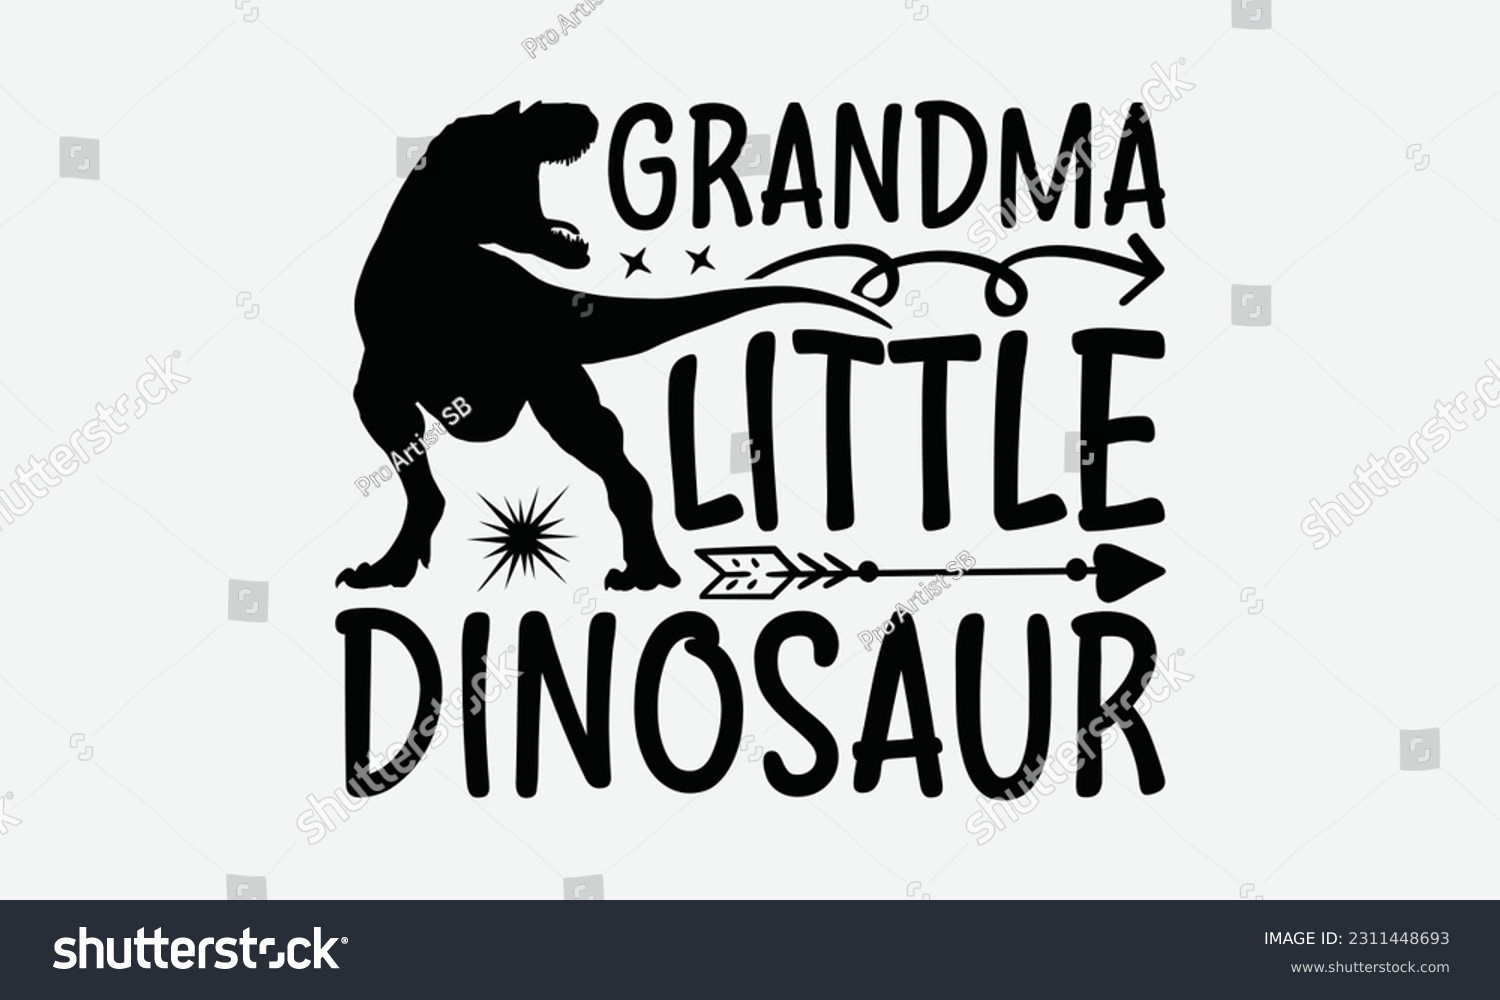 SVG of Grandma Little Dinosaur - Dinosaur SVG Design, Motivational Inspirational T-shirt Quotes, Hand Drawn Vintage Illustration With Hand-Lettering And Decoration Elements. svg